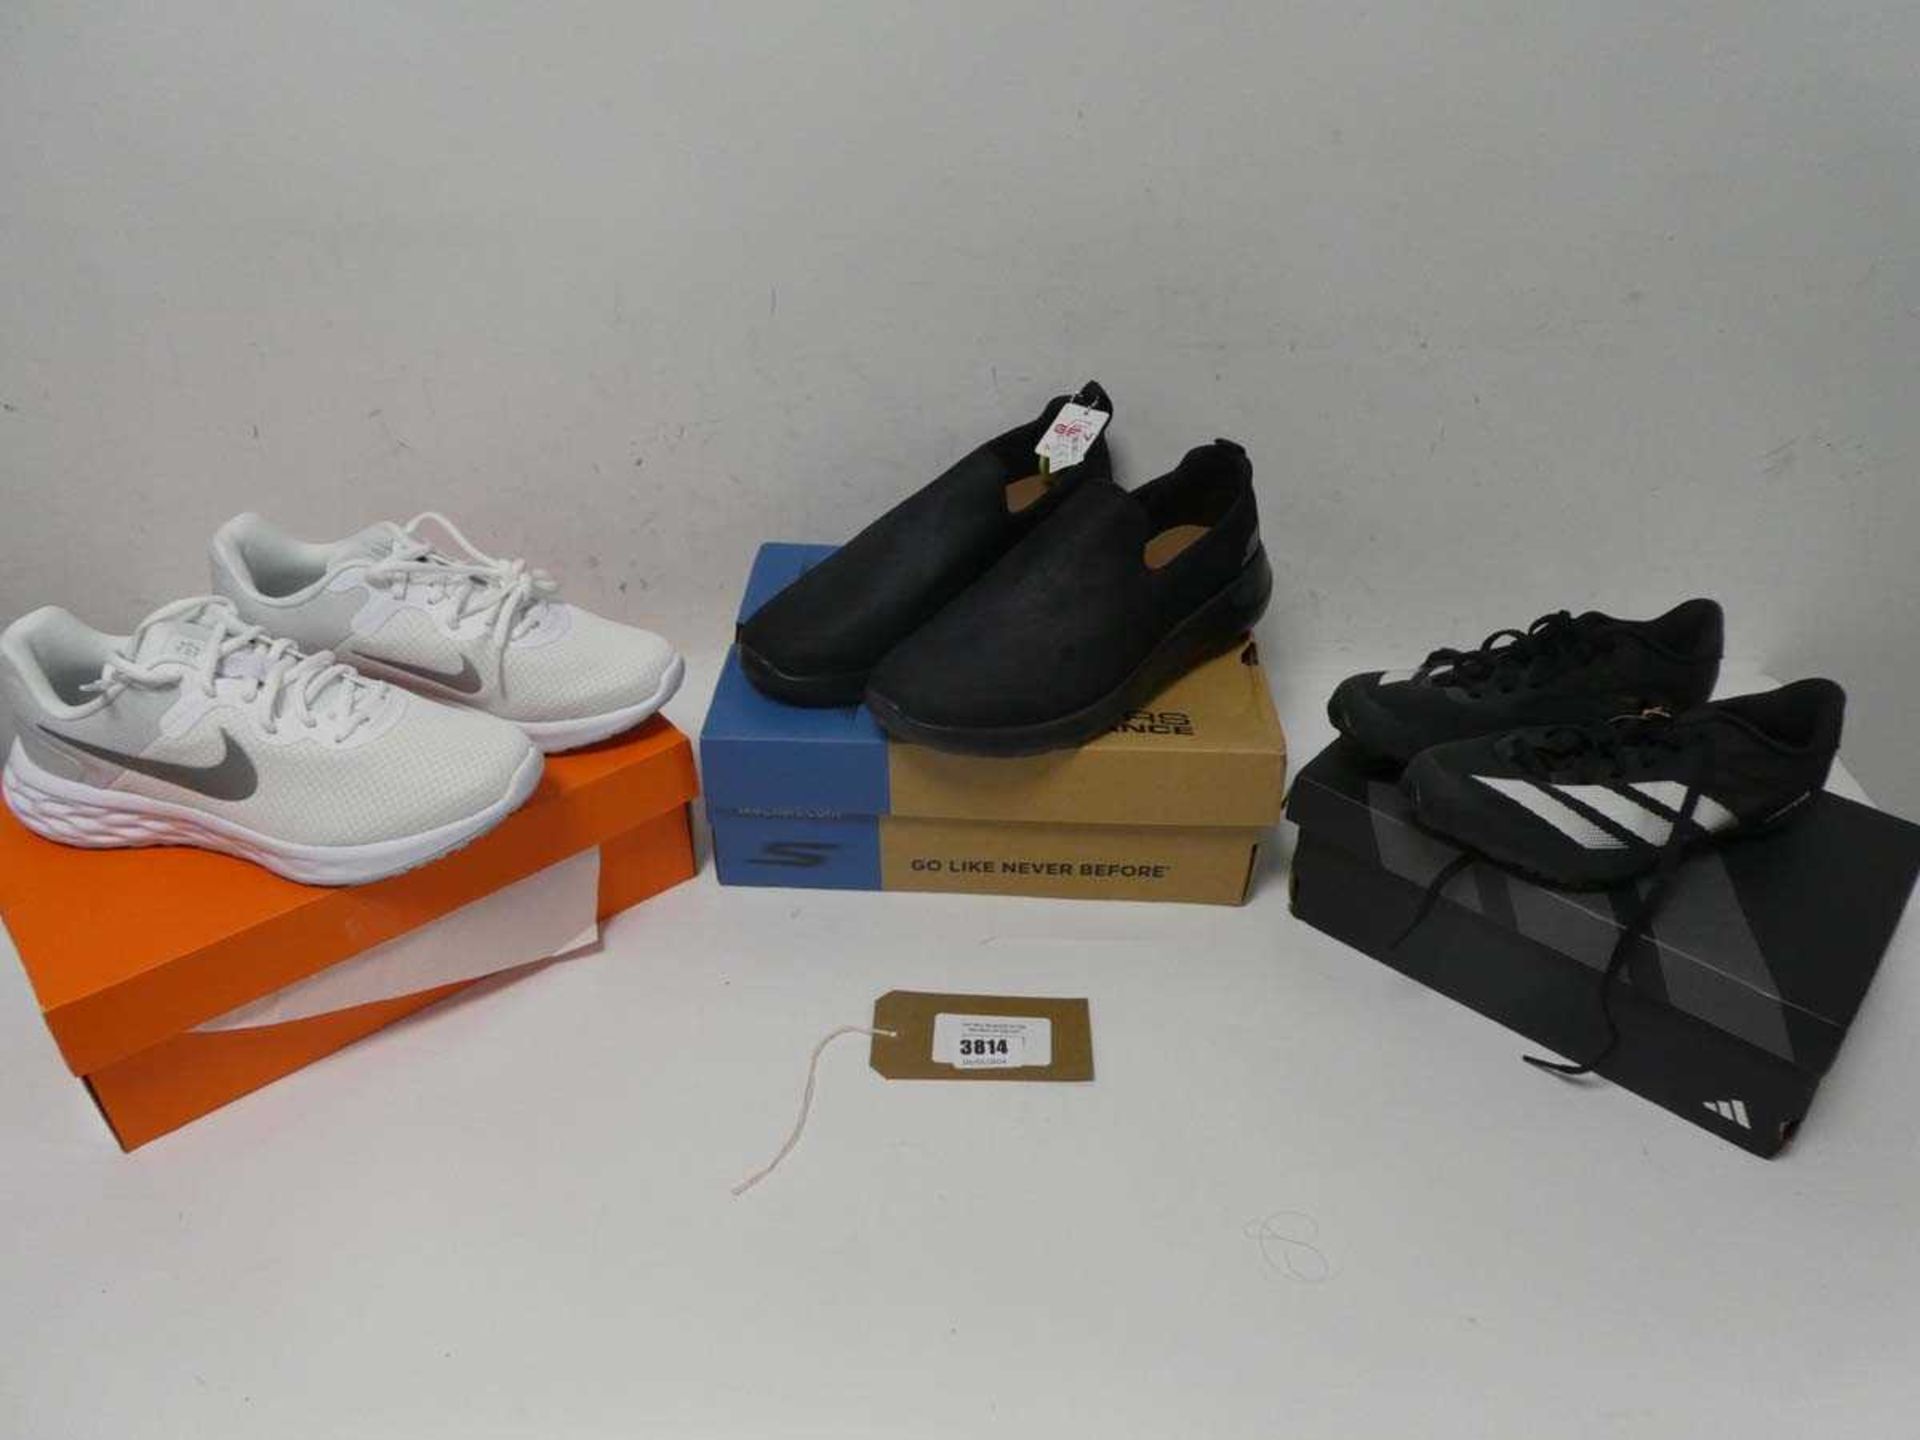 +VAT 1 x Nike trainers, UK 6 + 1 x Skechers, UK 9 + 1 x Adidas, UK 5.5 (3)